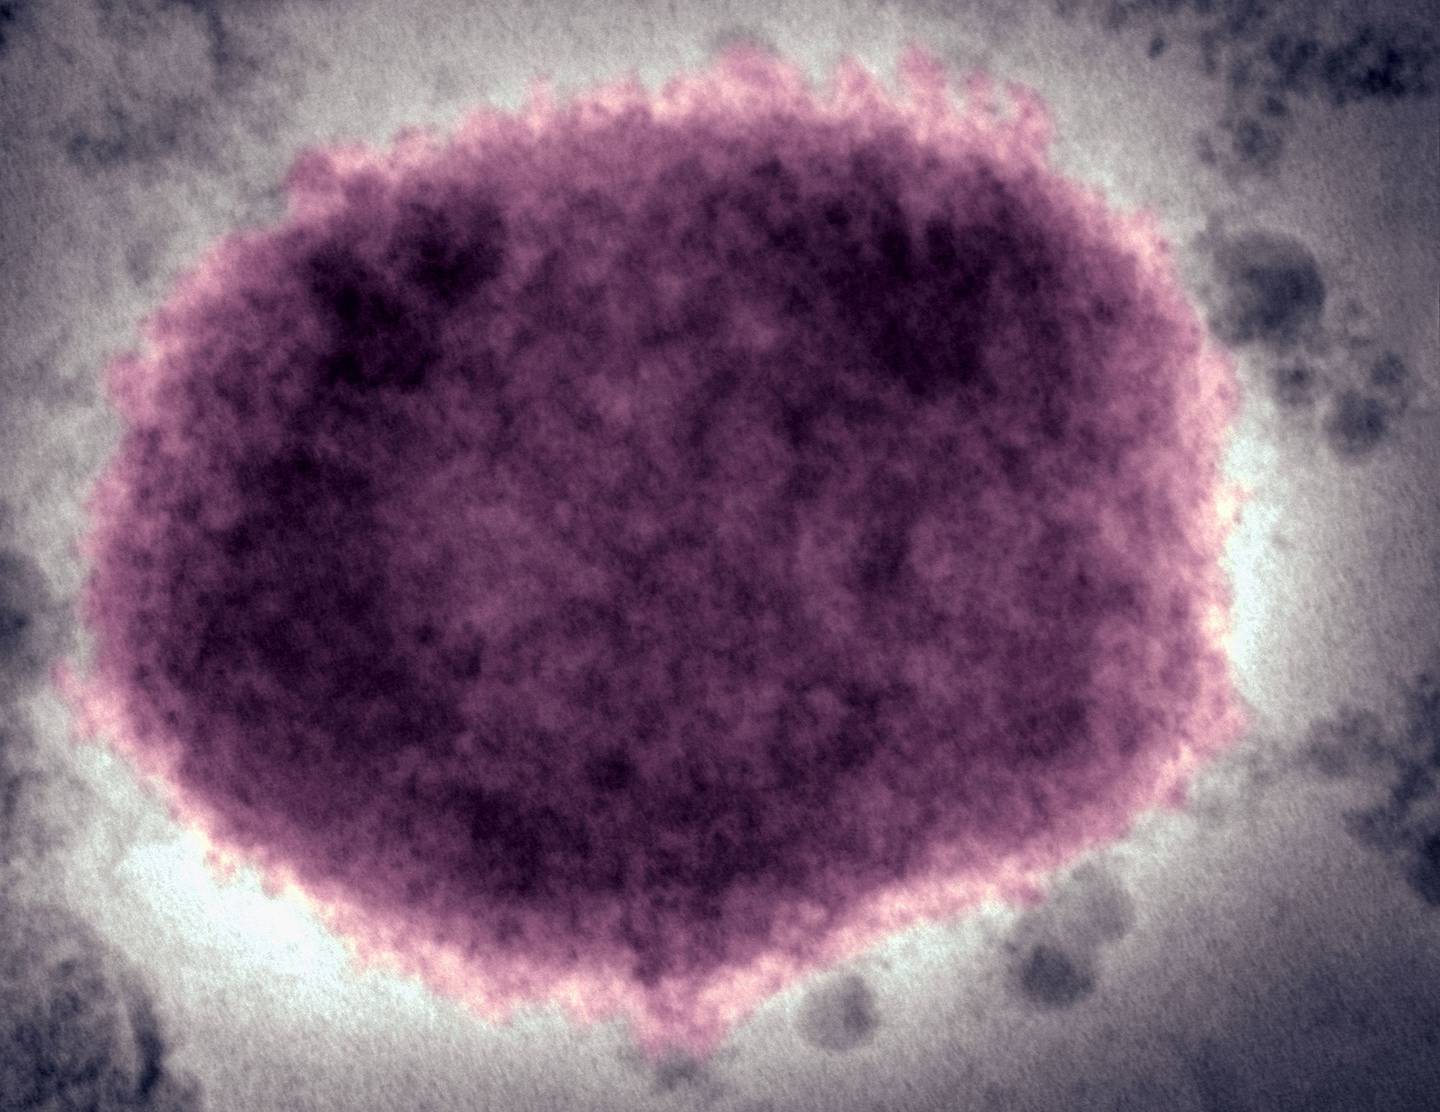 Virus de la viruela del mono en fluido vesicular humano